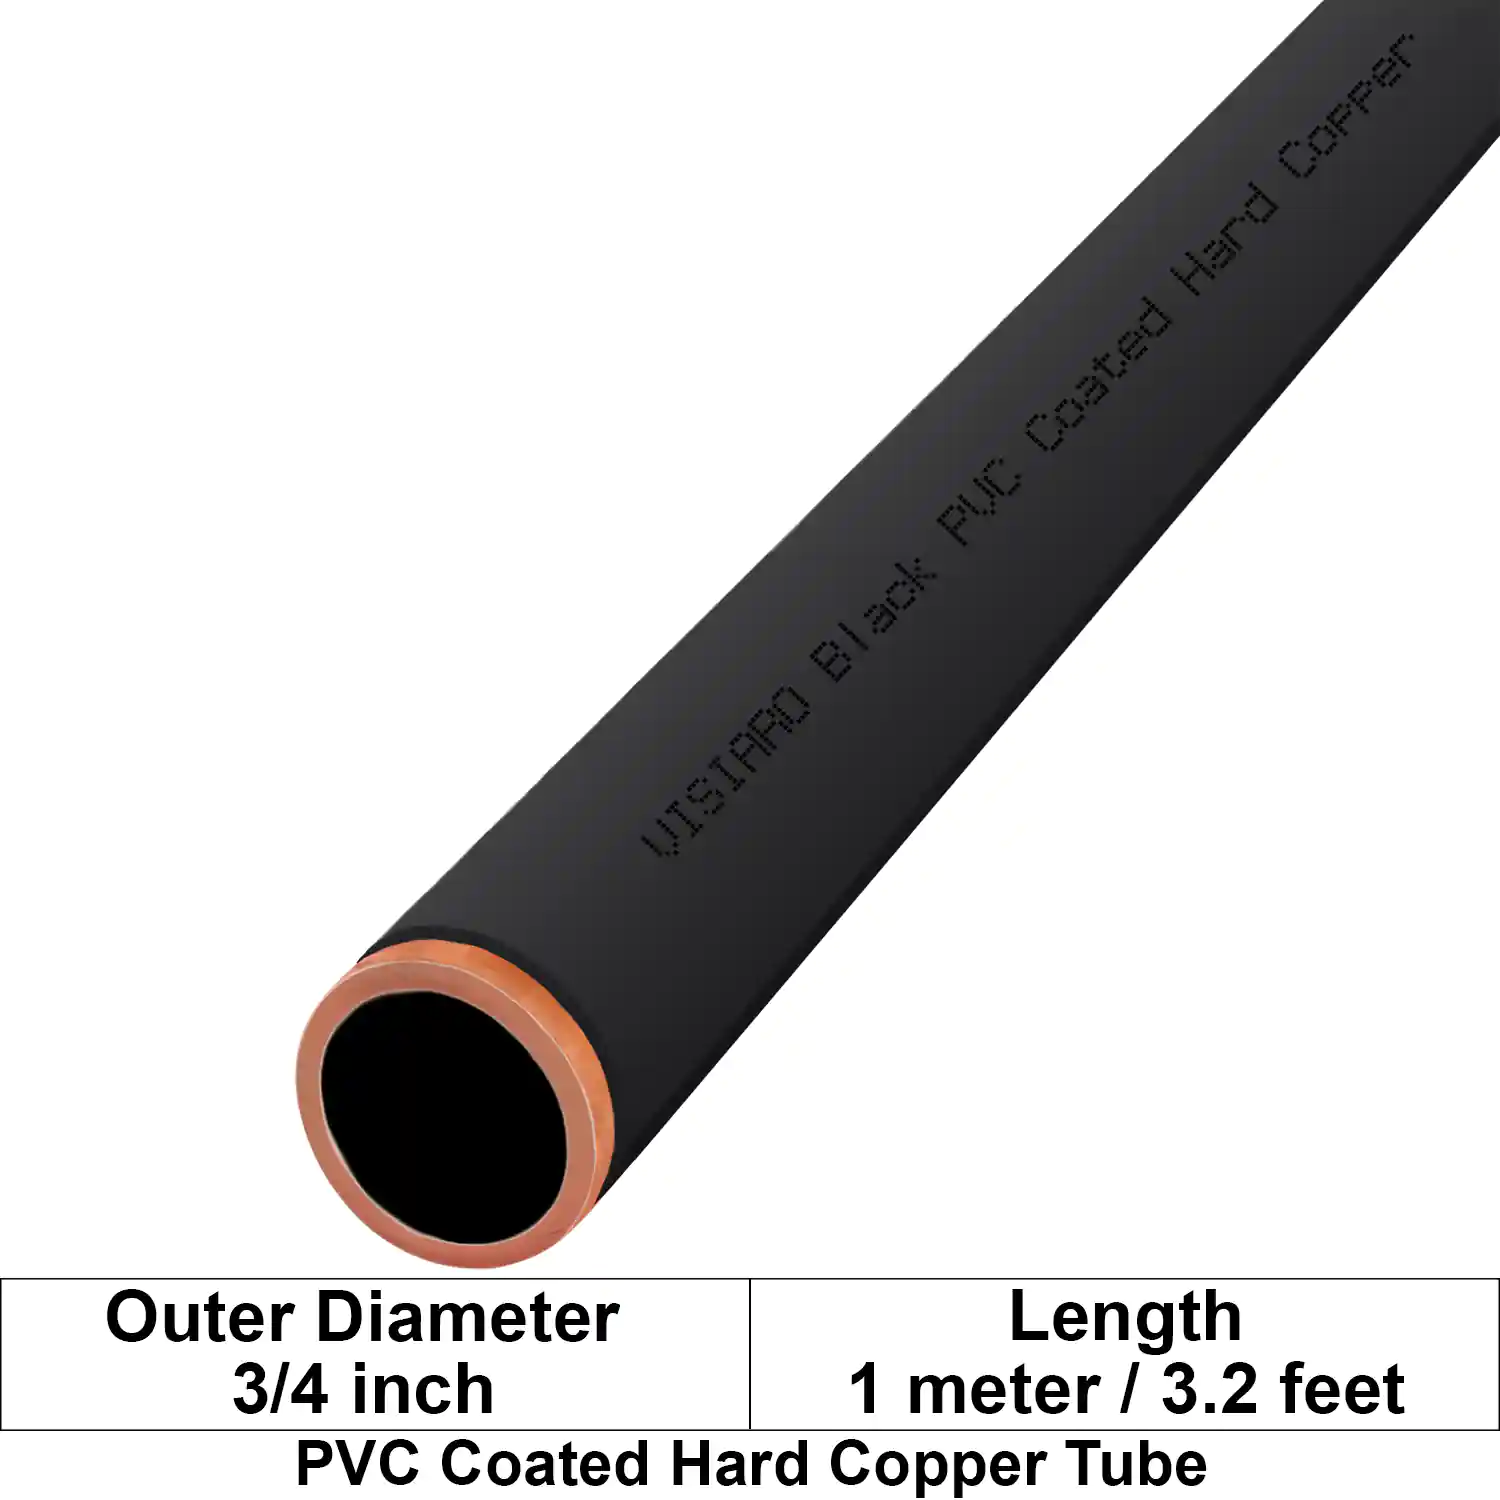 Visiaro Black PVC Coated Hard Copper Tube 1mtr long Outer Diameter - 3/4 inch